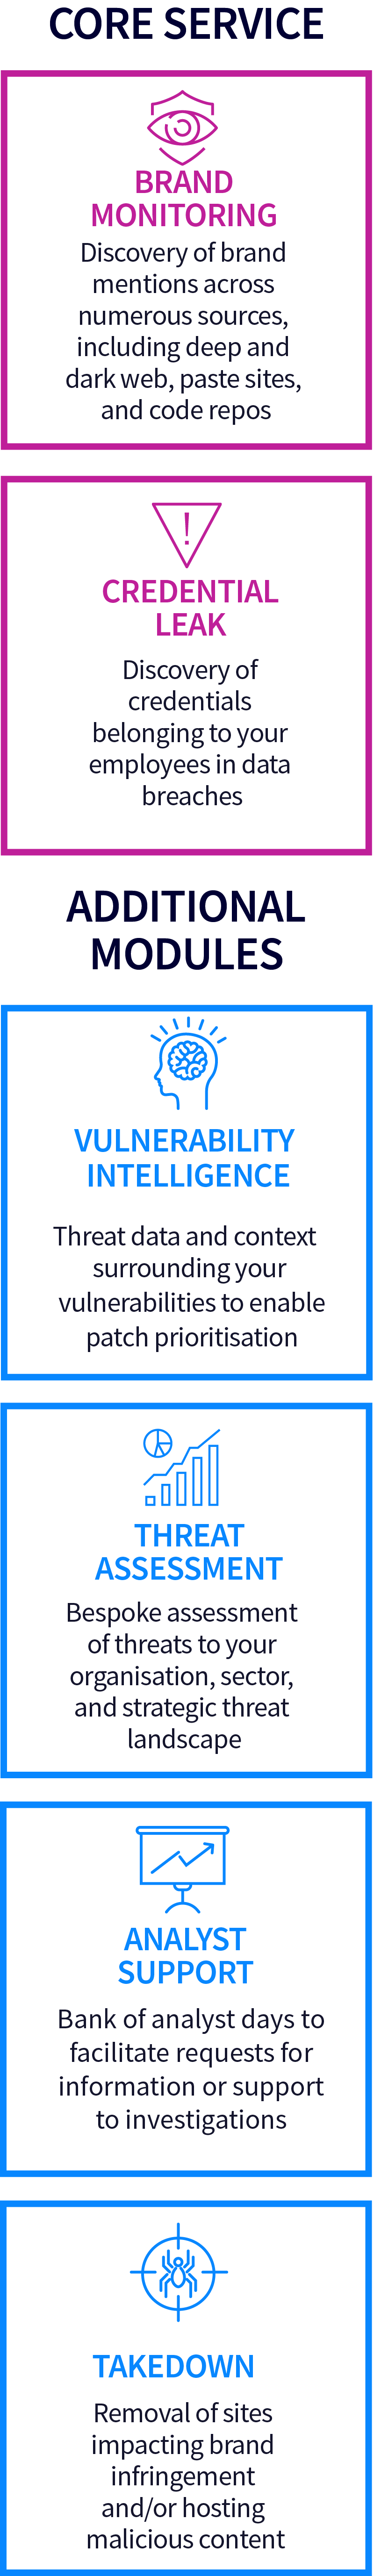 ThreatWatcher | Threat Intelligence | LRQA Nettitude Cyber Security